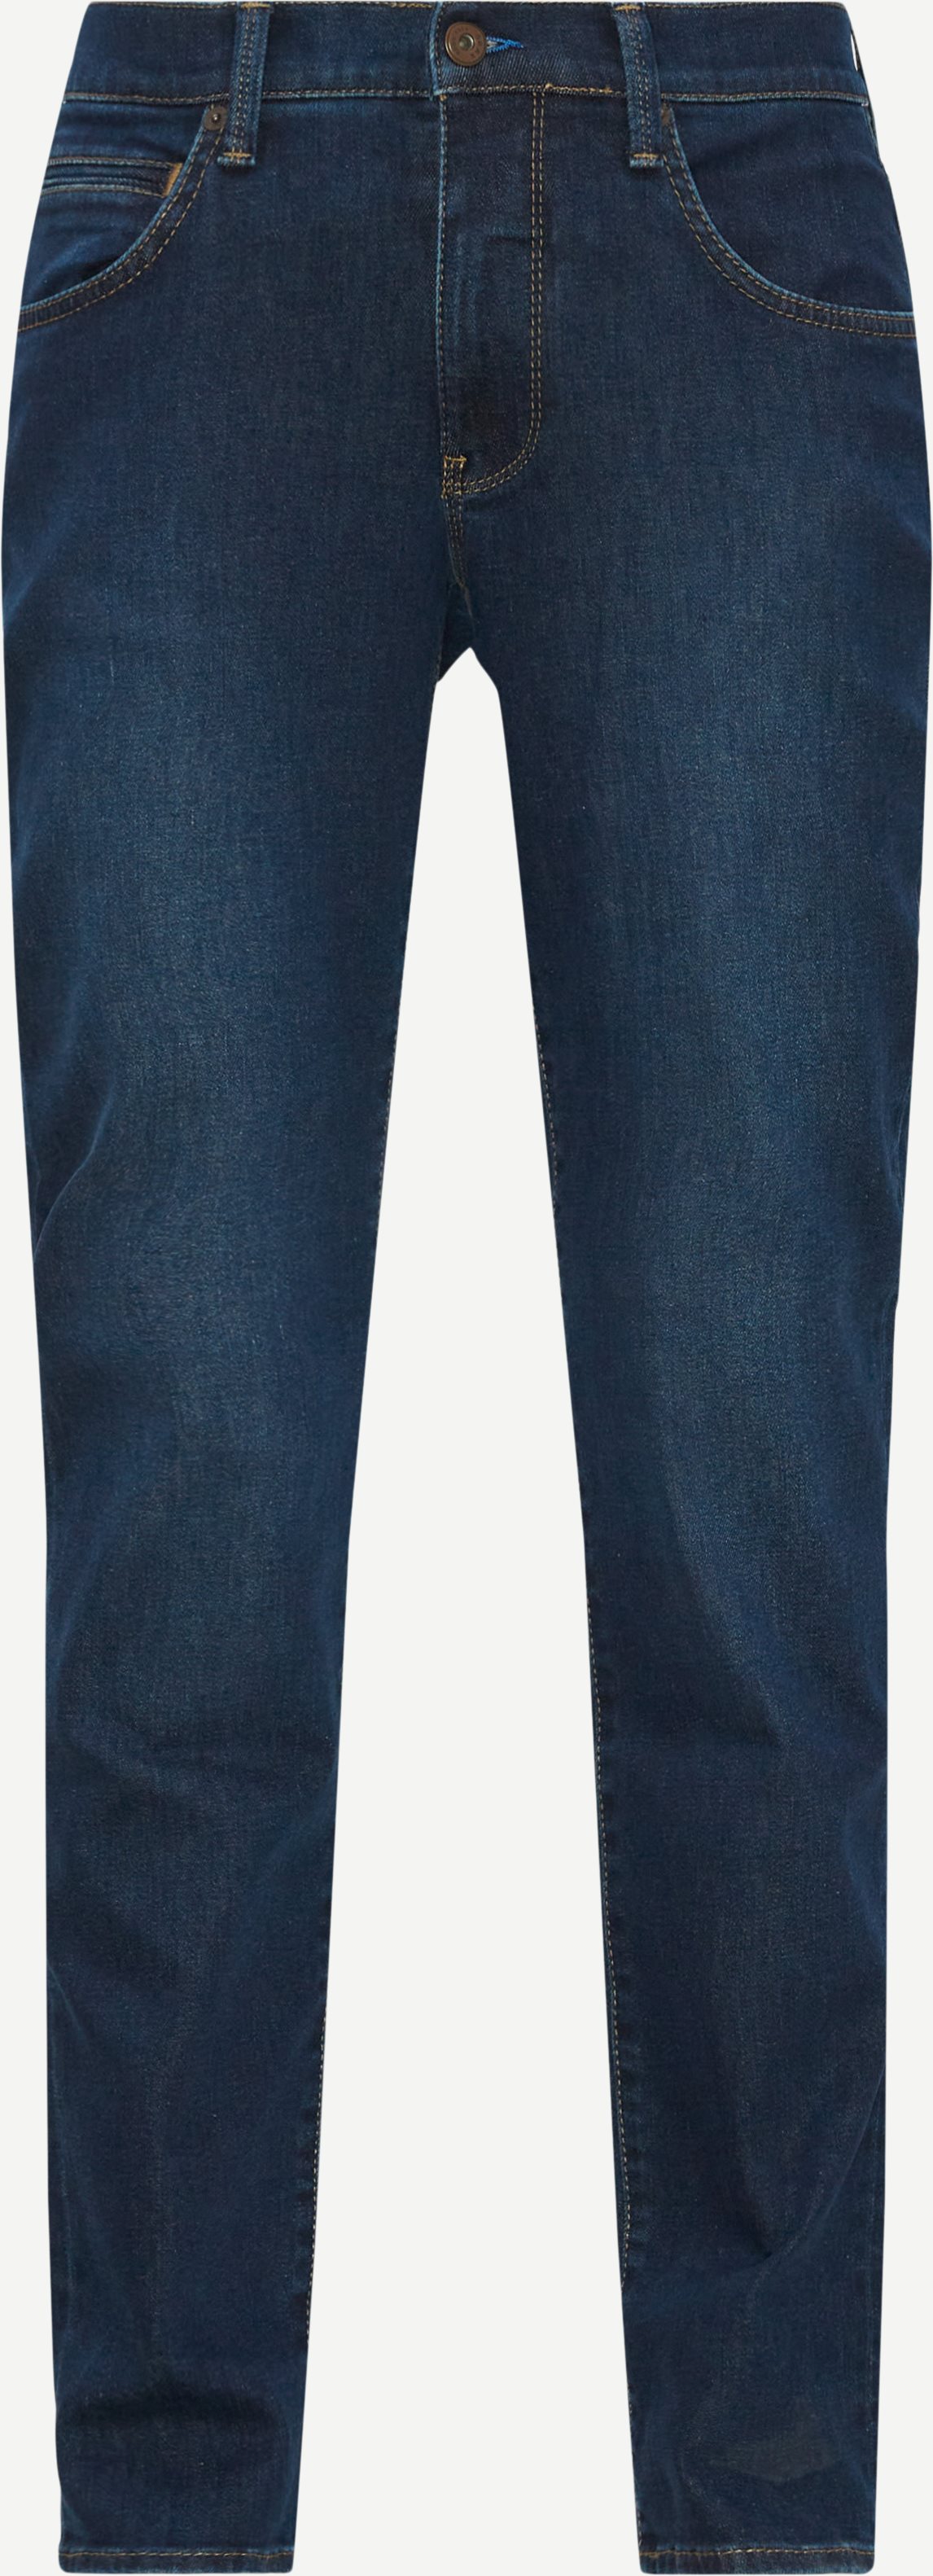 Brax Jeans 83-6058 CADIZ Denim